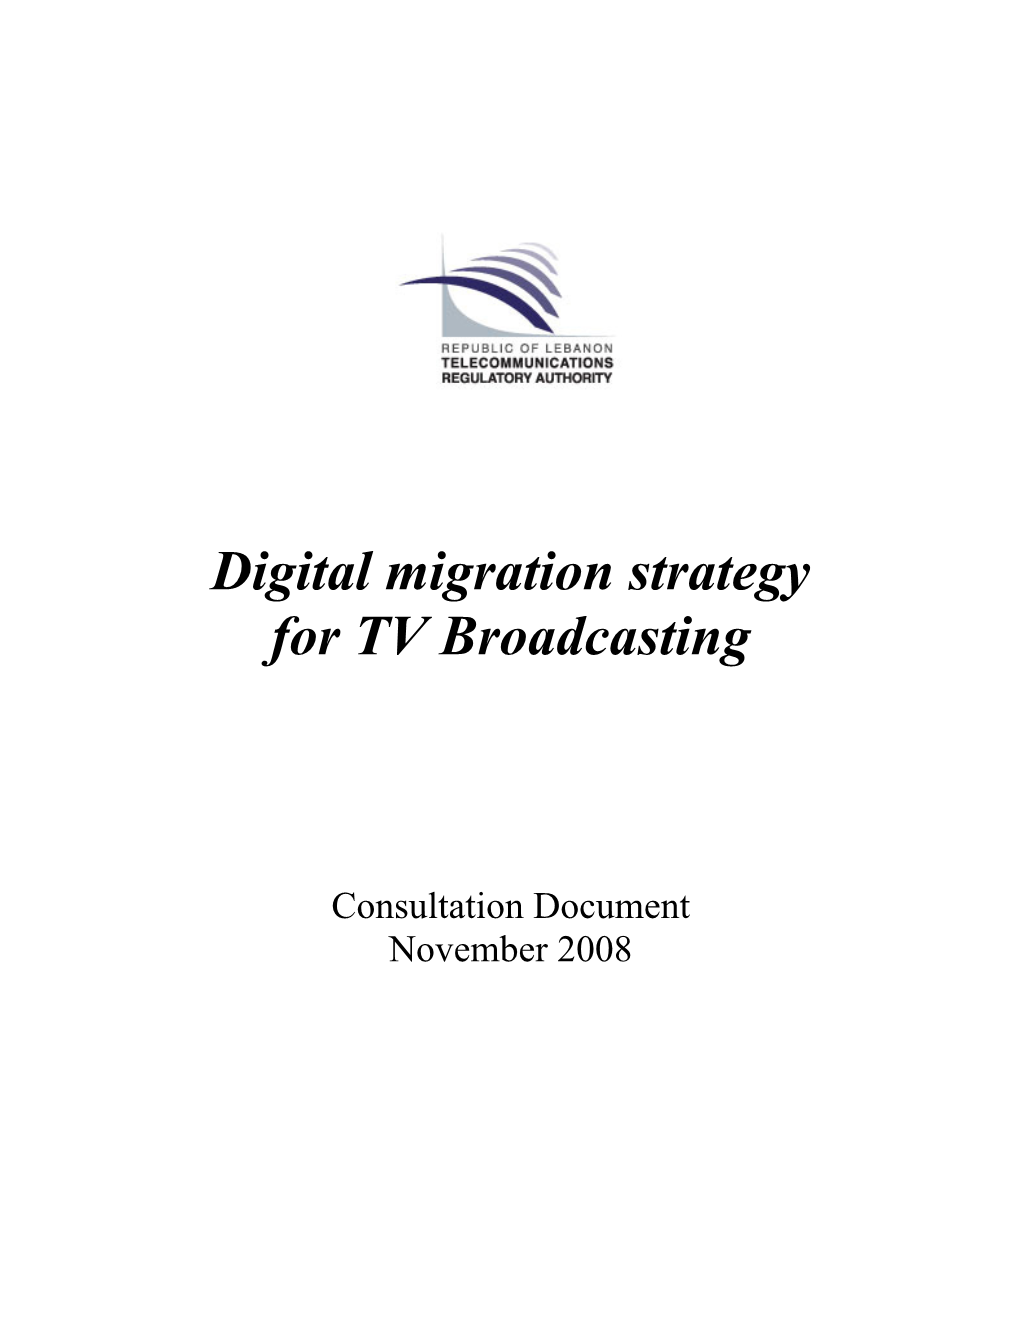 Digital Migration Strategy for TV Broadcasting